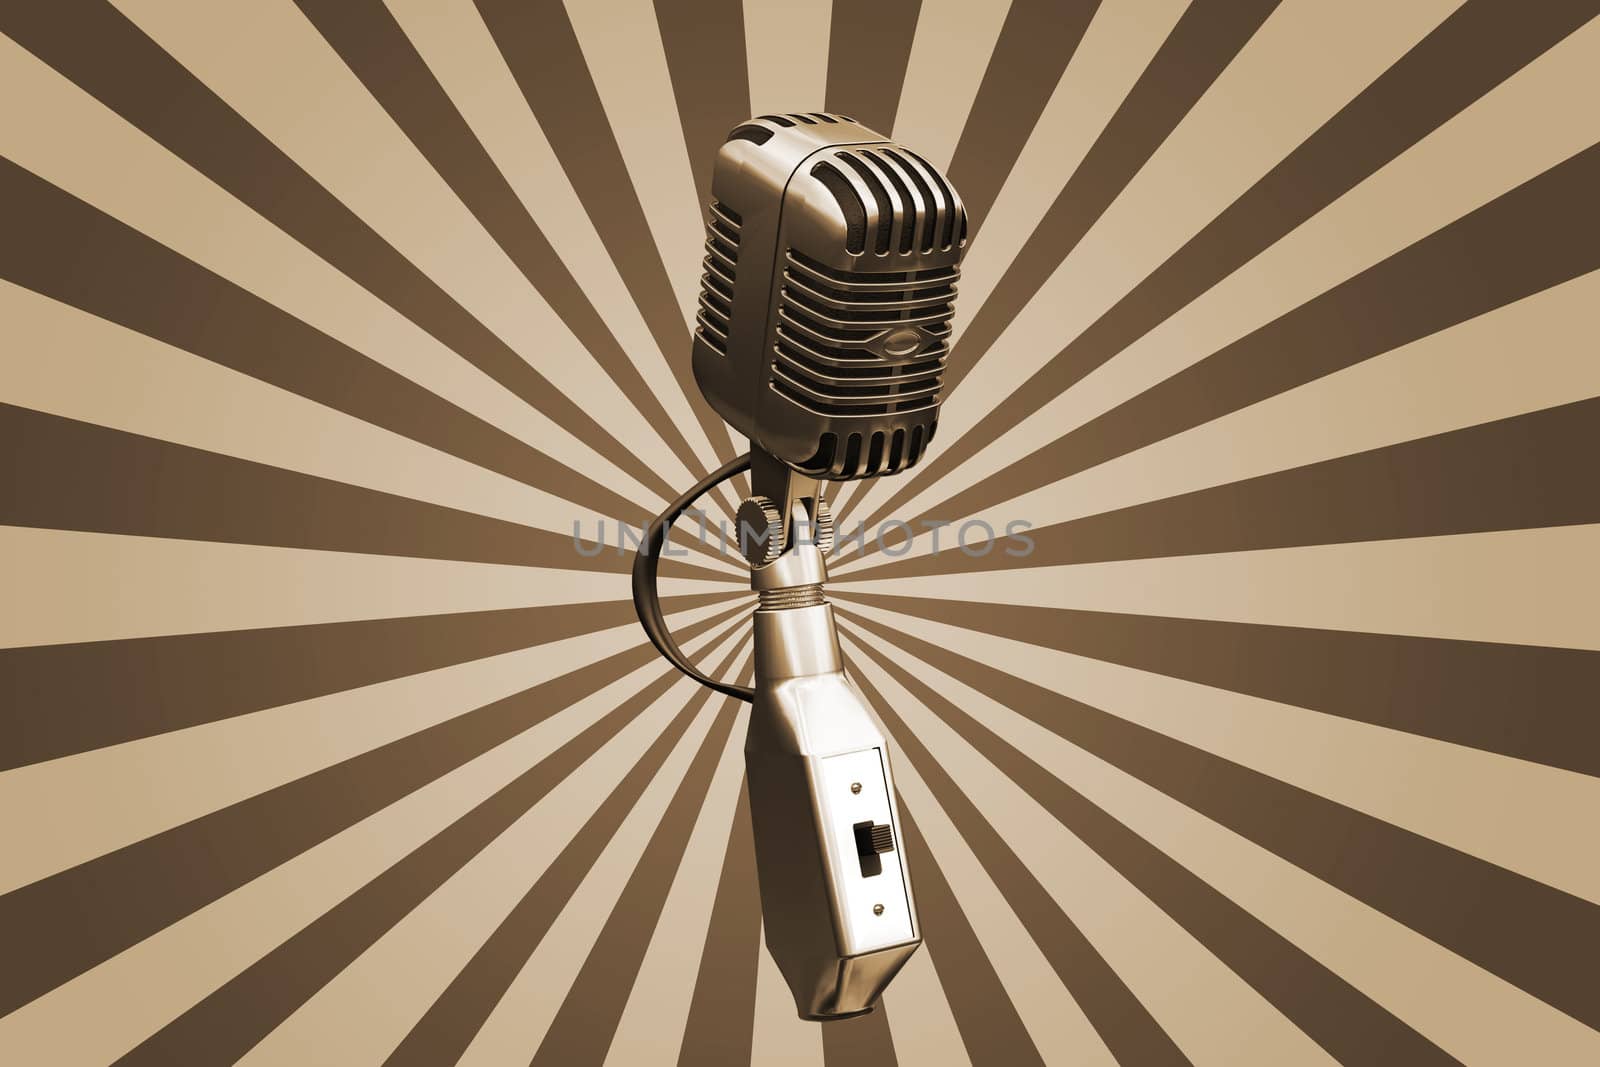 Retro microphone on starburst background